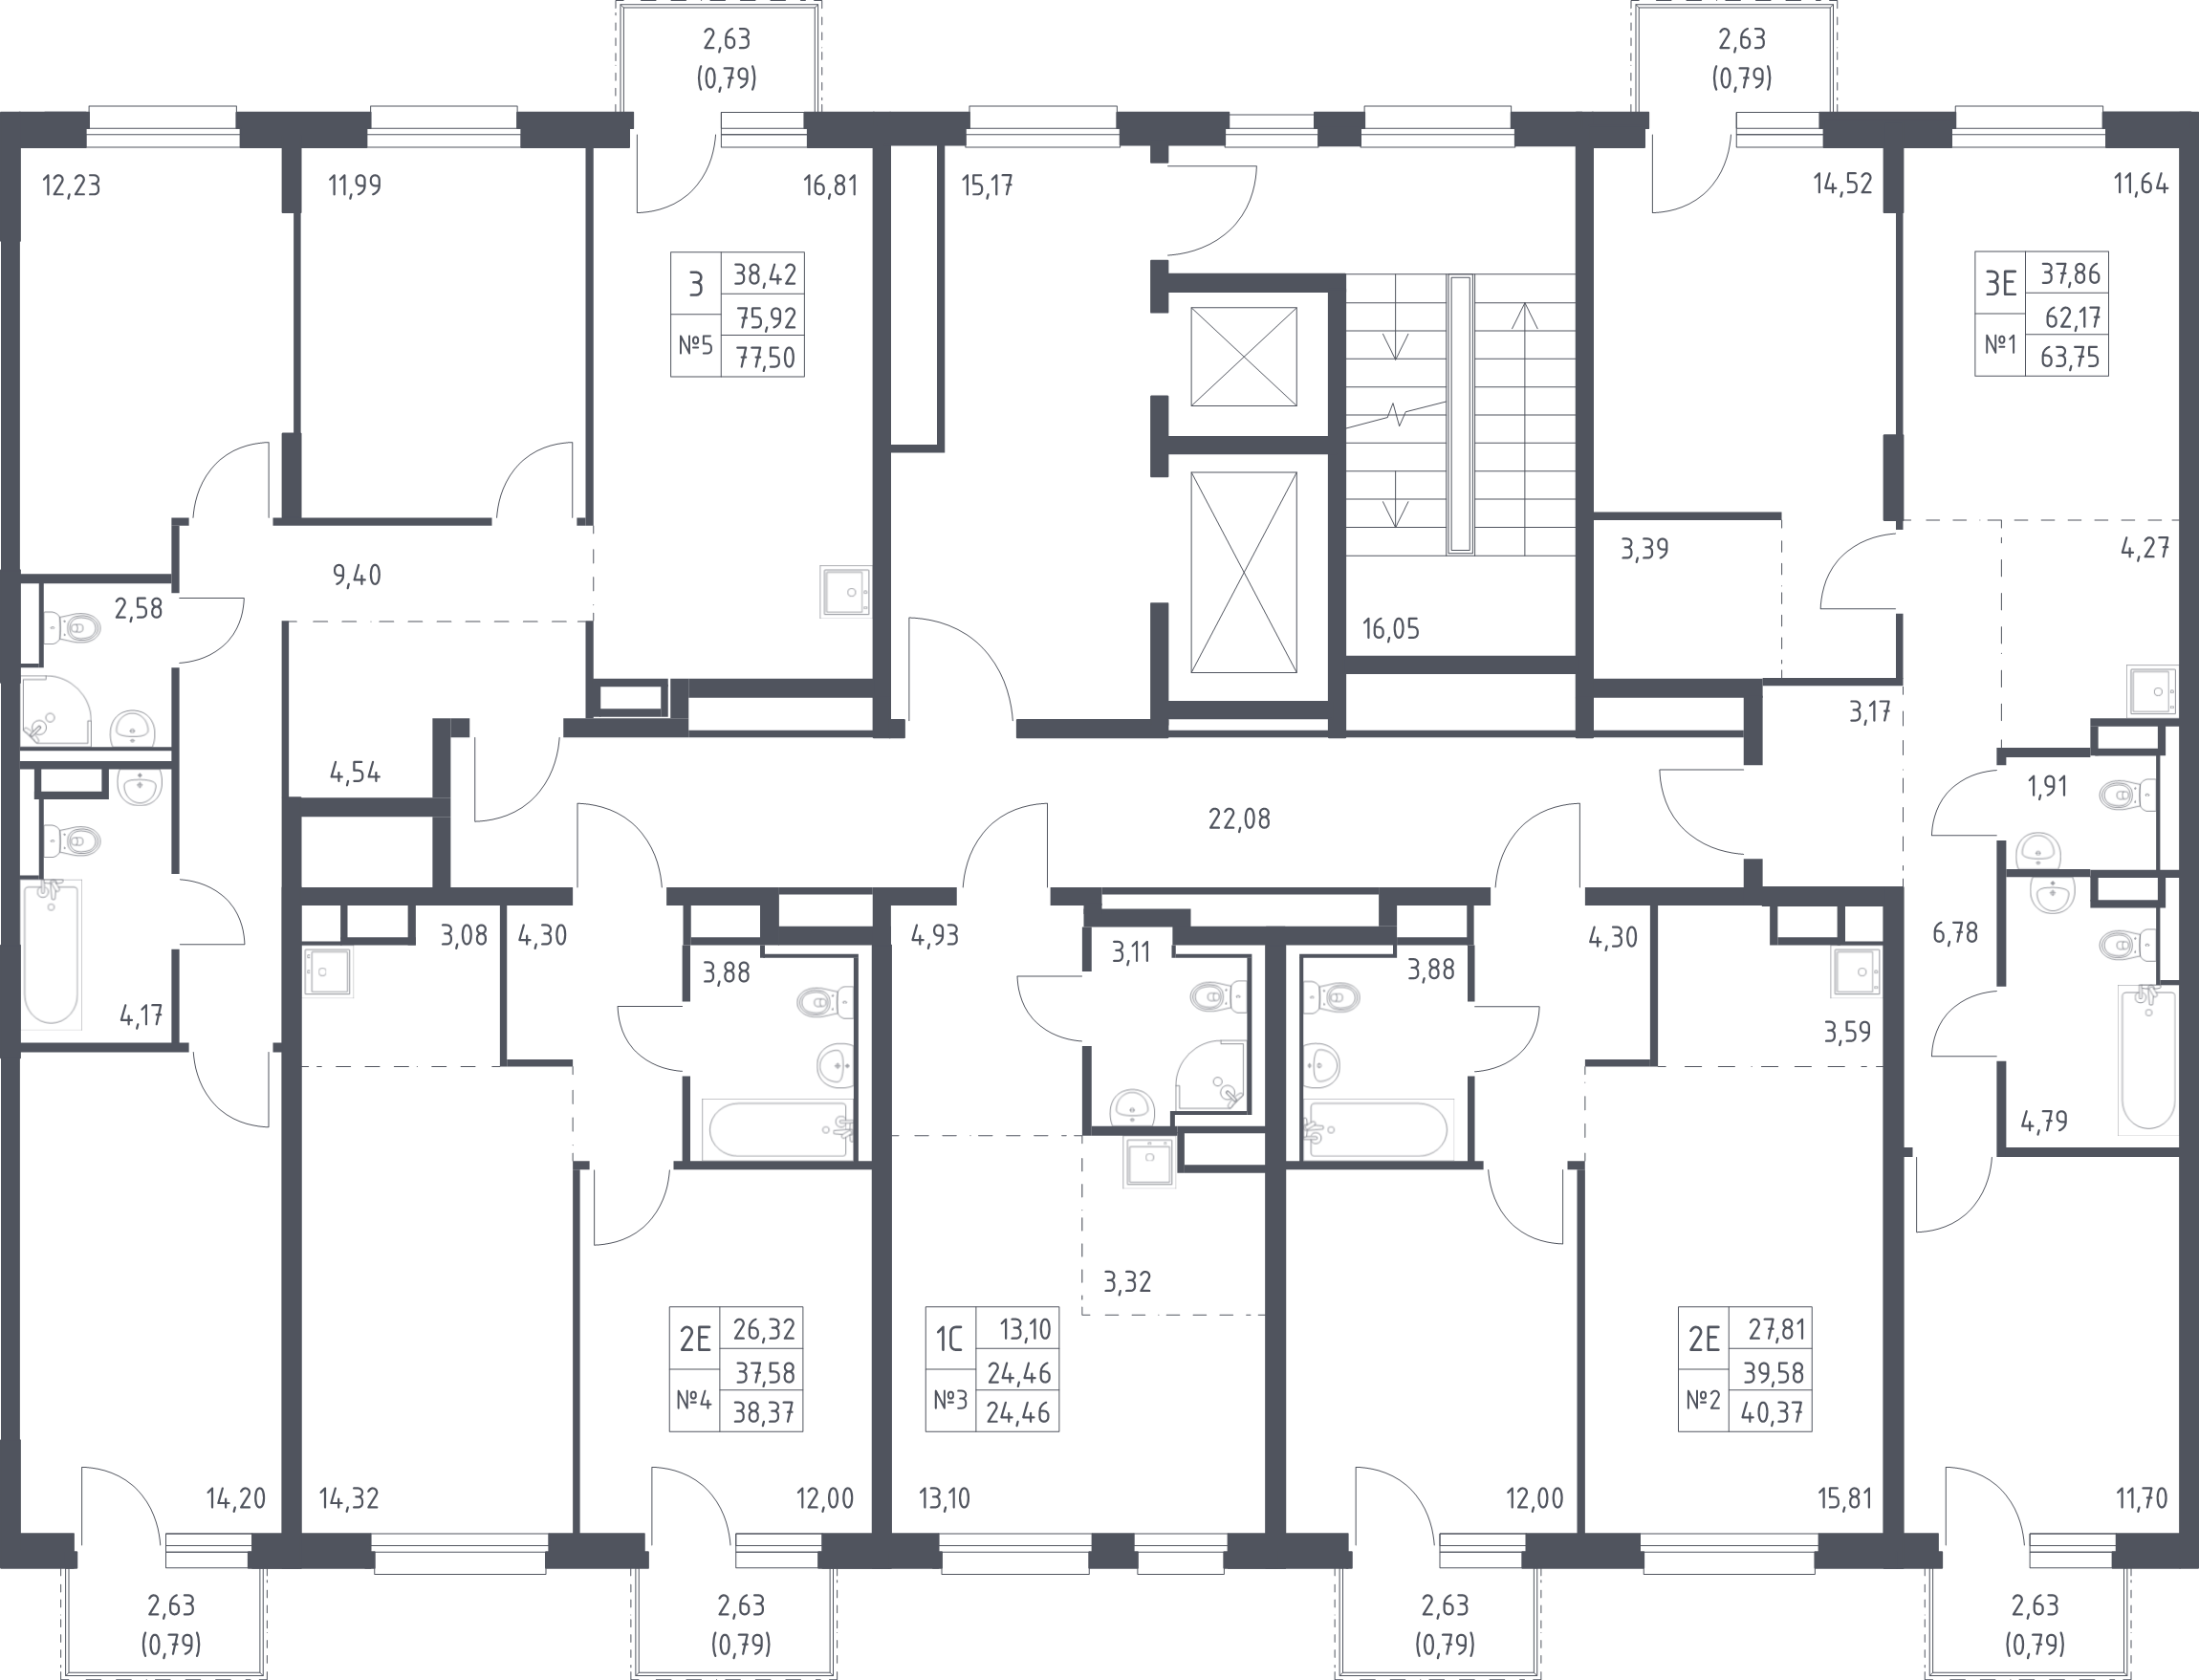 3-комнатная (Евро) квартира, 63.75 м² - планировка этажа